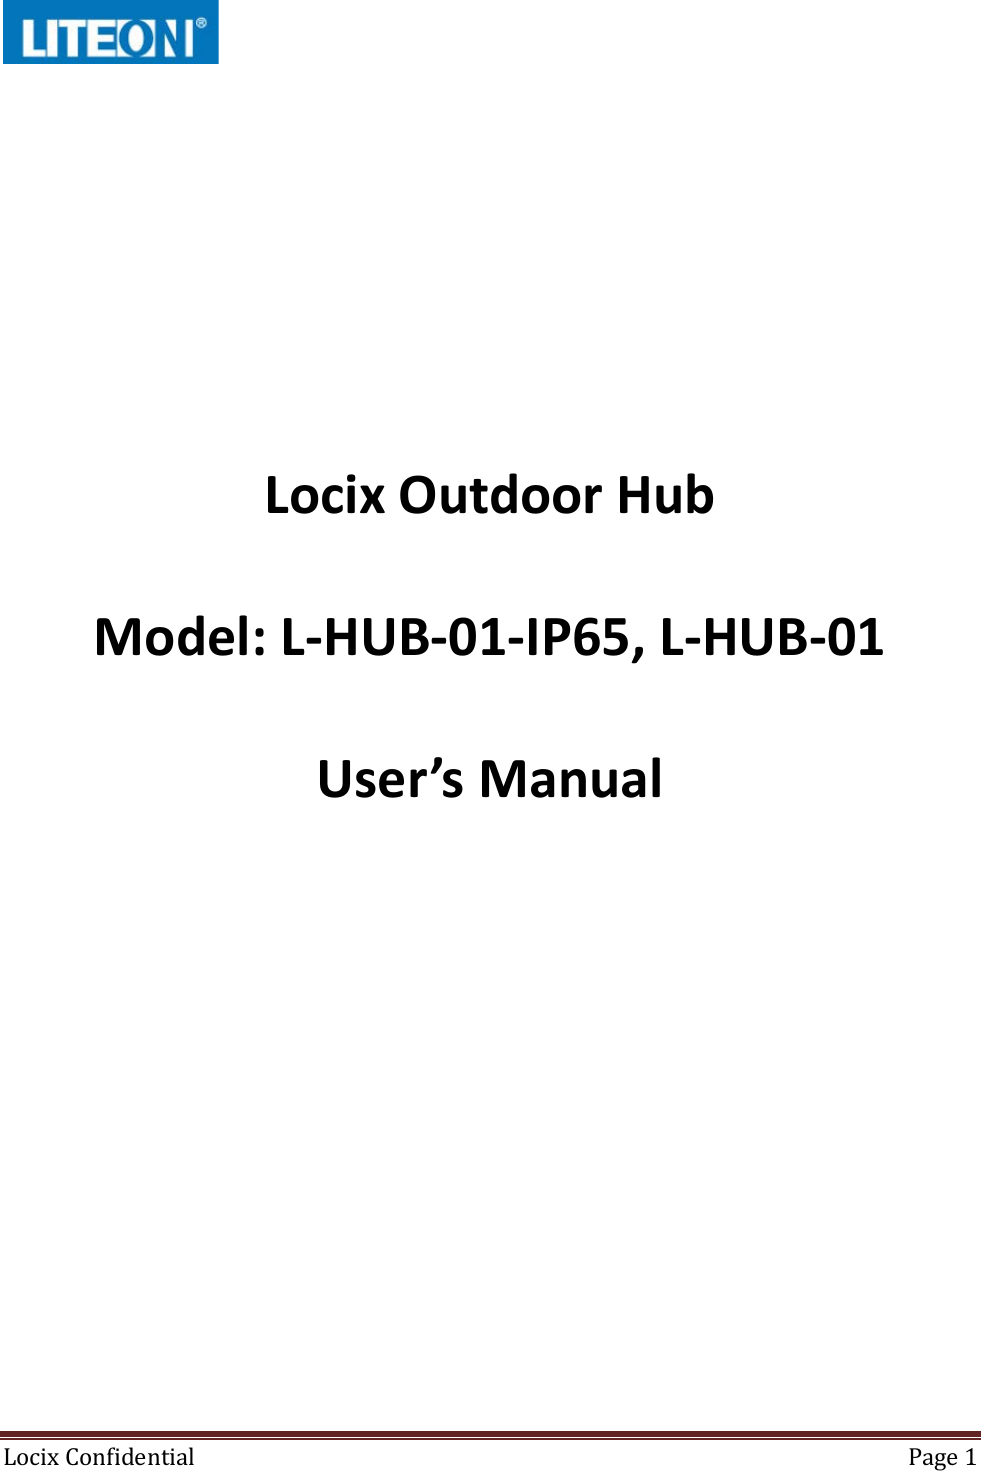  Locix Confidential Page 1            Locix Outdoor Hub  Model: L-HUB-01-IP65, L-HUB-01  User’s Manual      